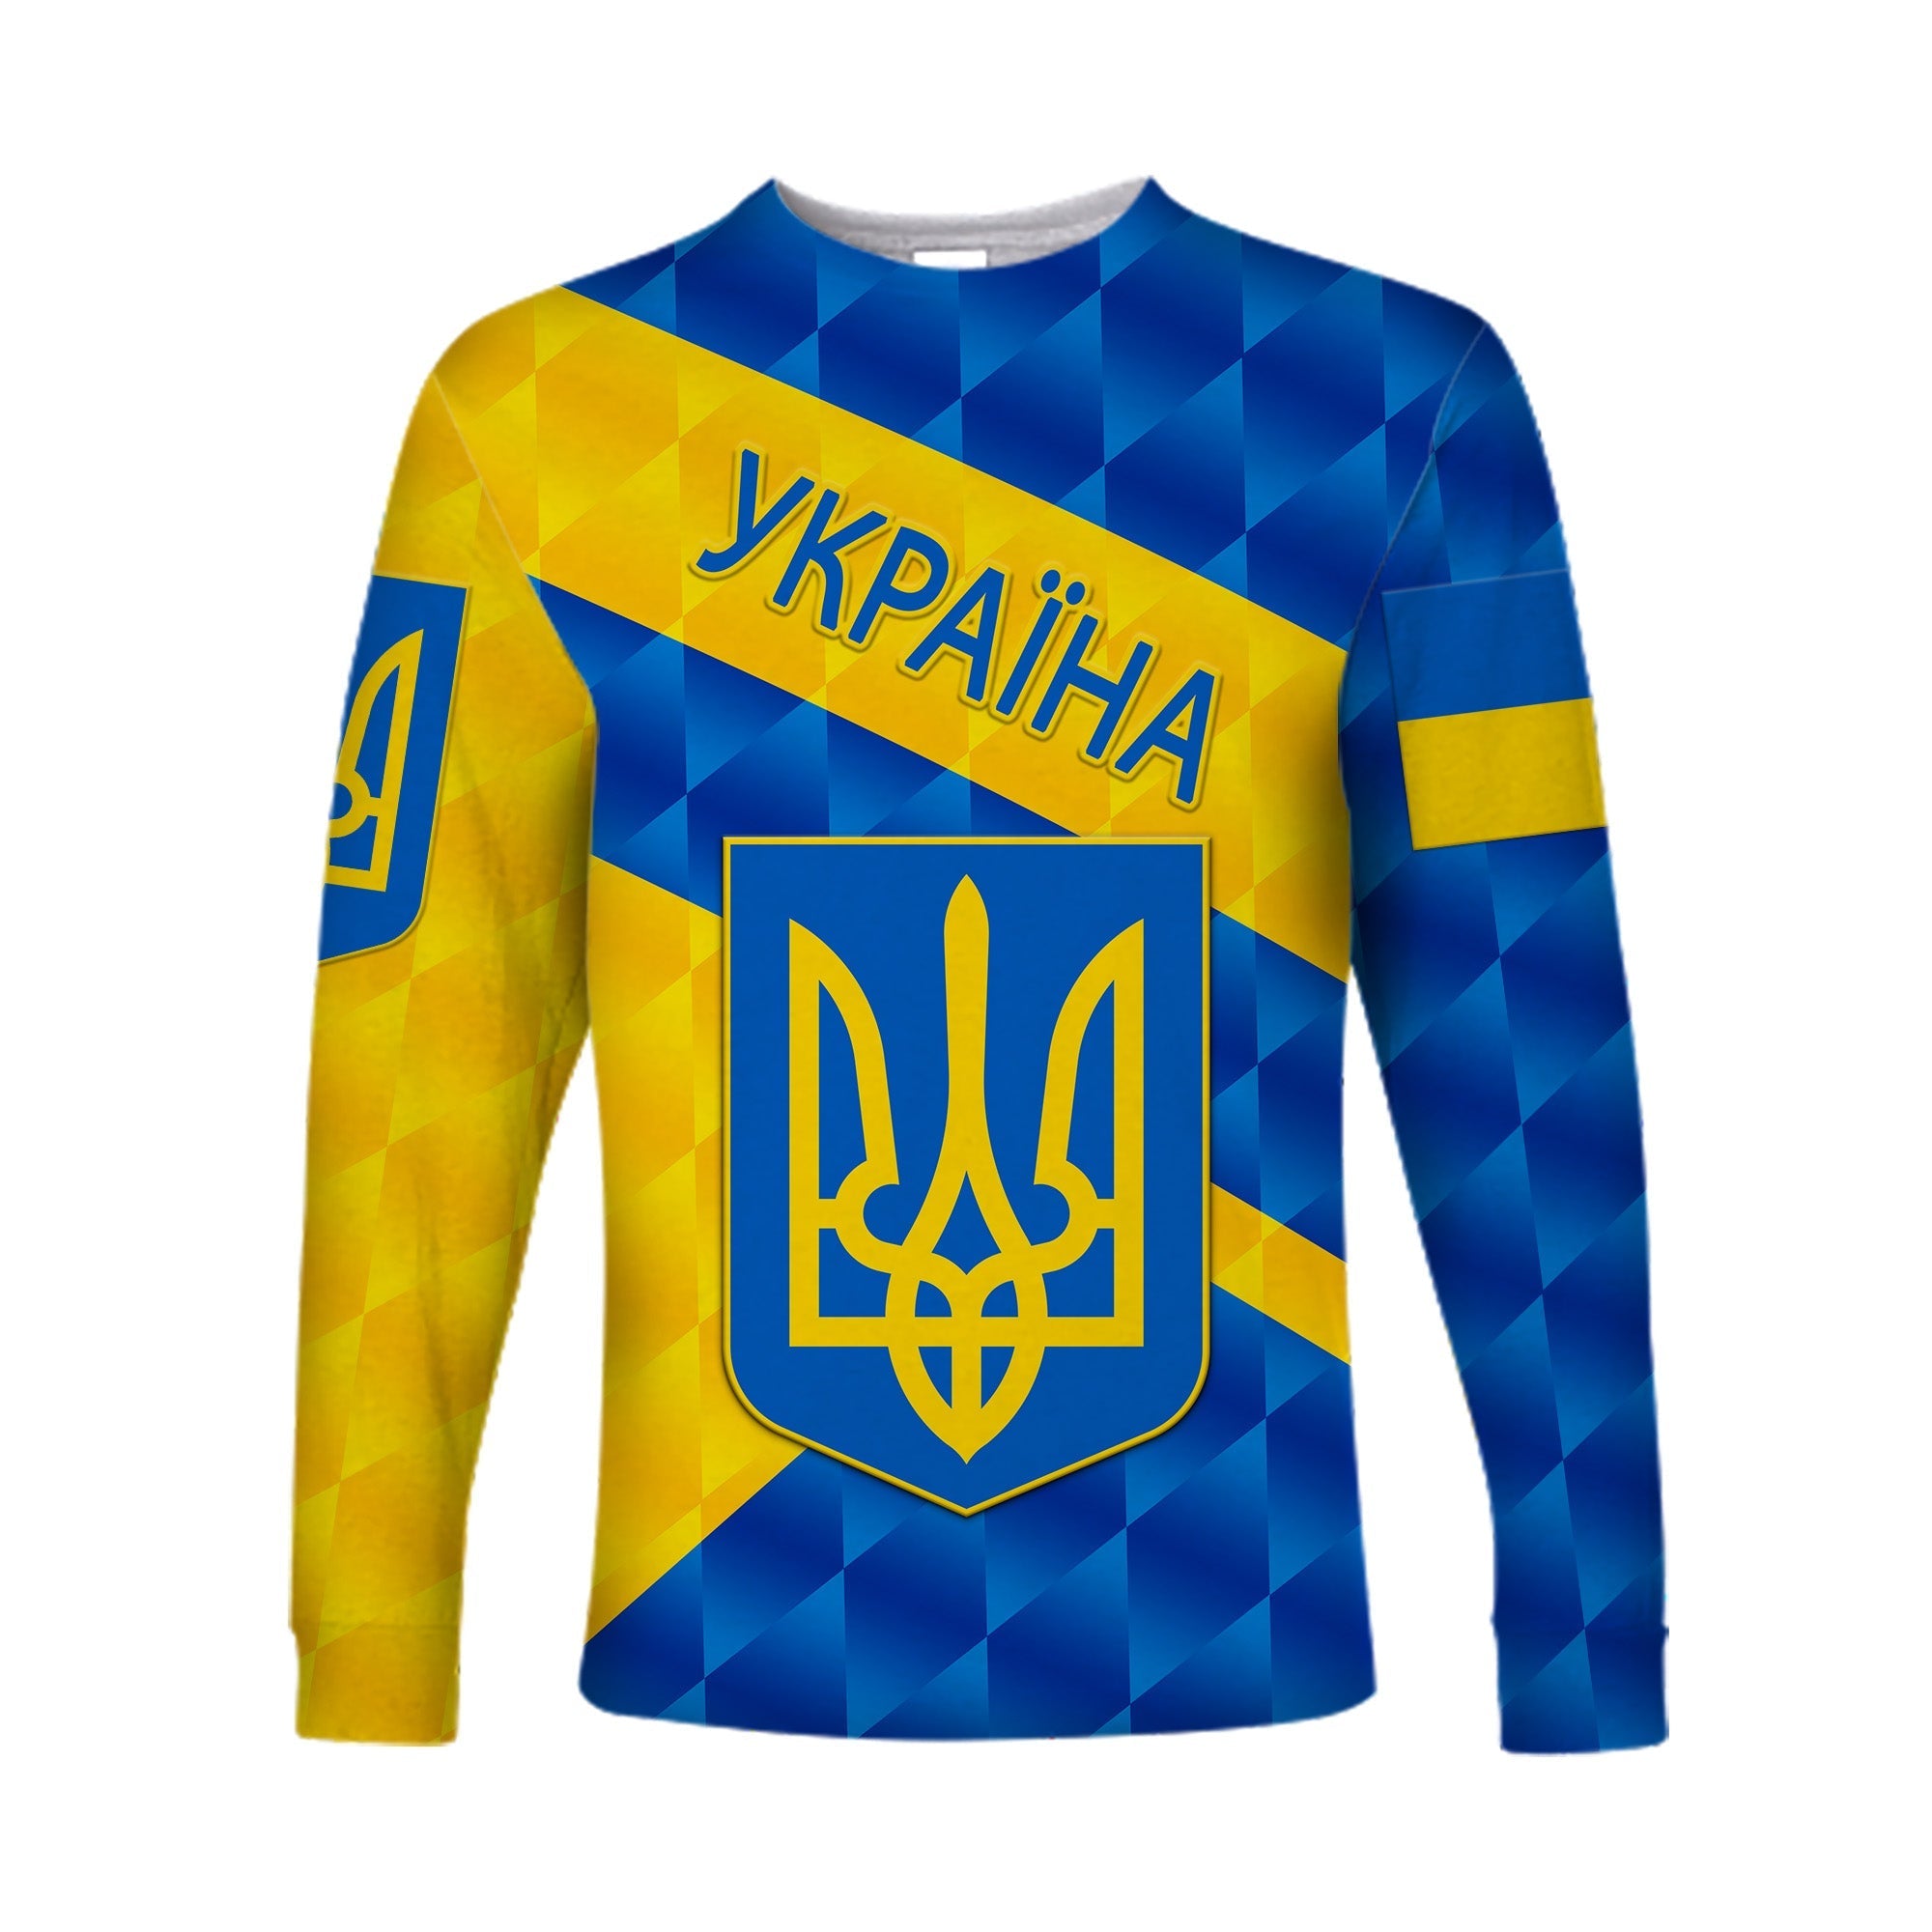 ukraine-long-sleeve-shirt-sporty-style